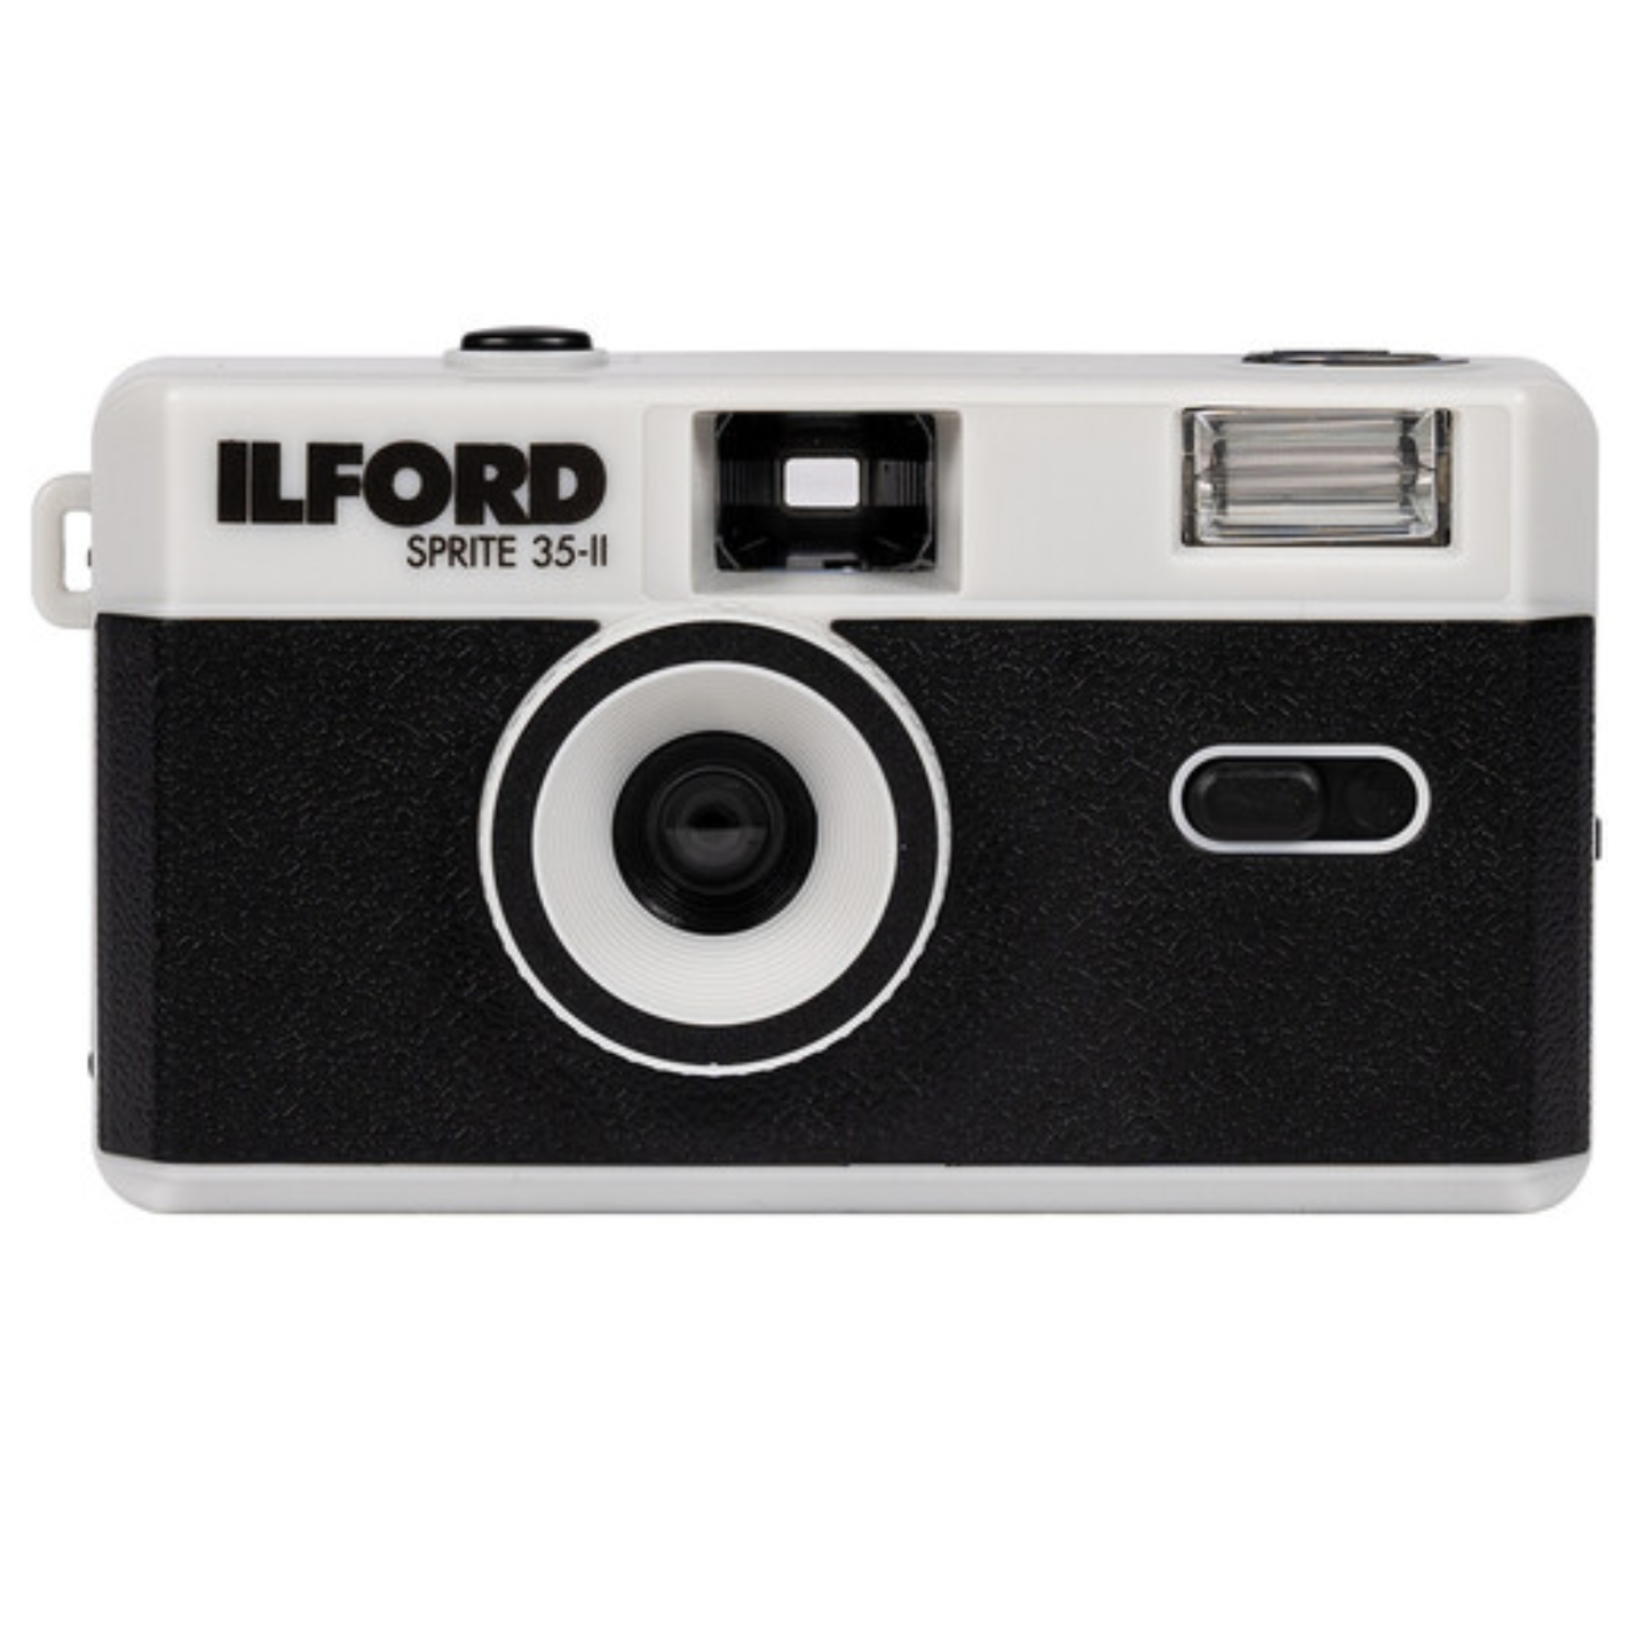 Ilford Ilford Sprite 35-II Film Cameras (Choose Color)